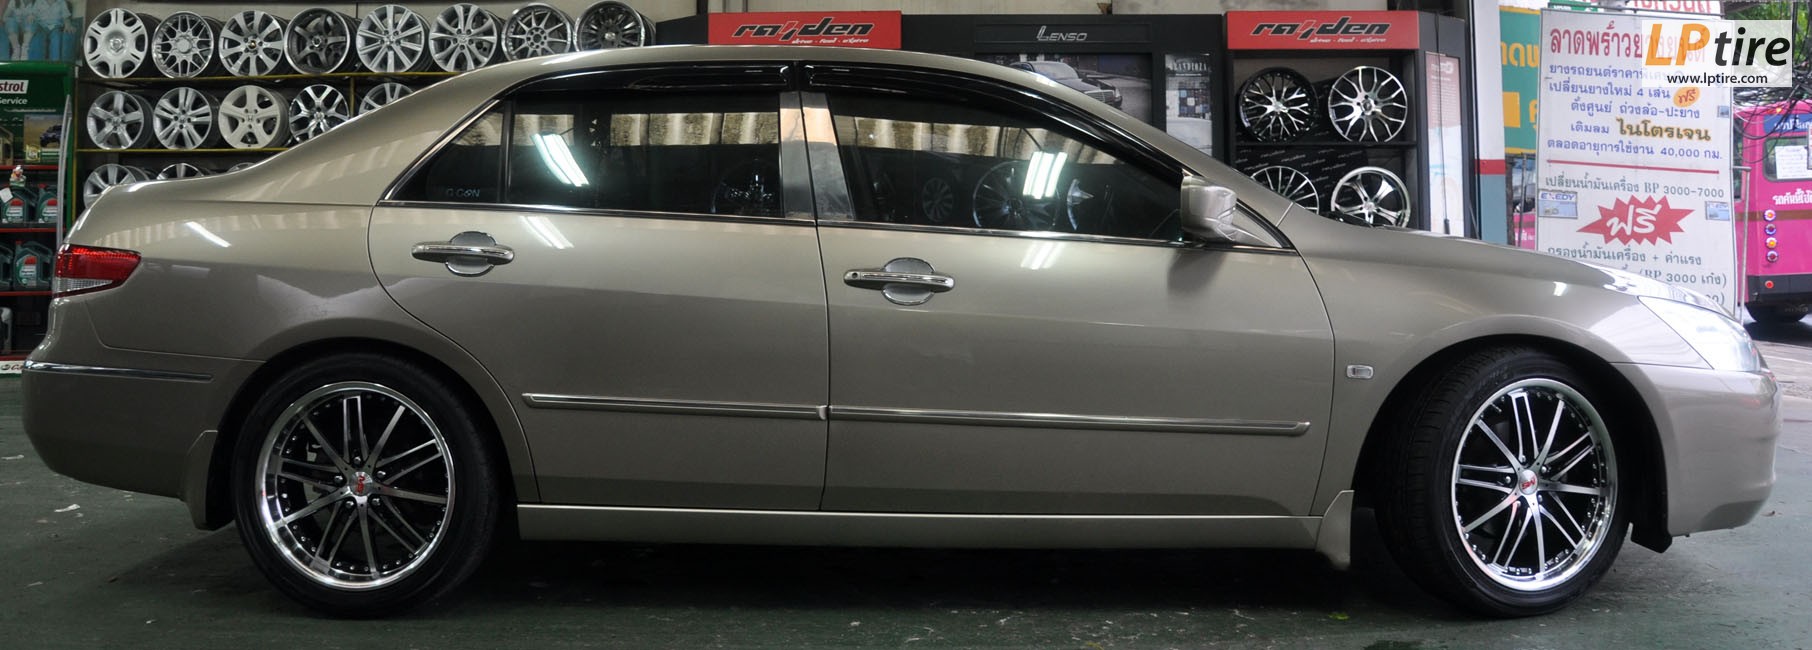 Honda Accord + ล้อแม็ก Traffics VZ 18นิ้ว สีดำหน้าเงา หน้าตื้น หลังลึก + ยาง FALKEN ZE912 225/45R18